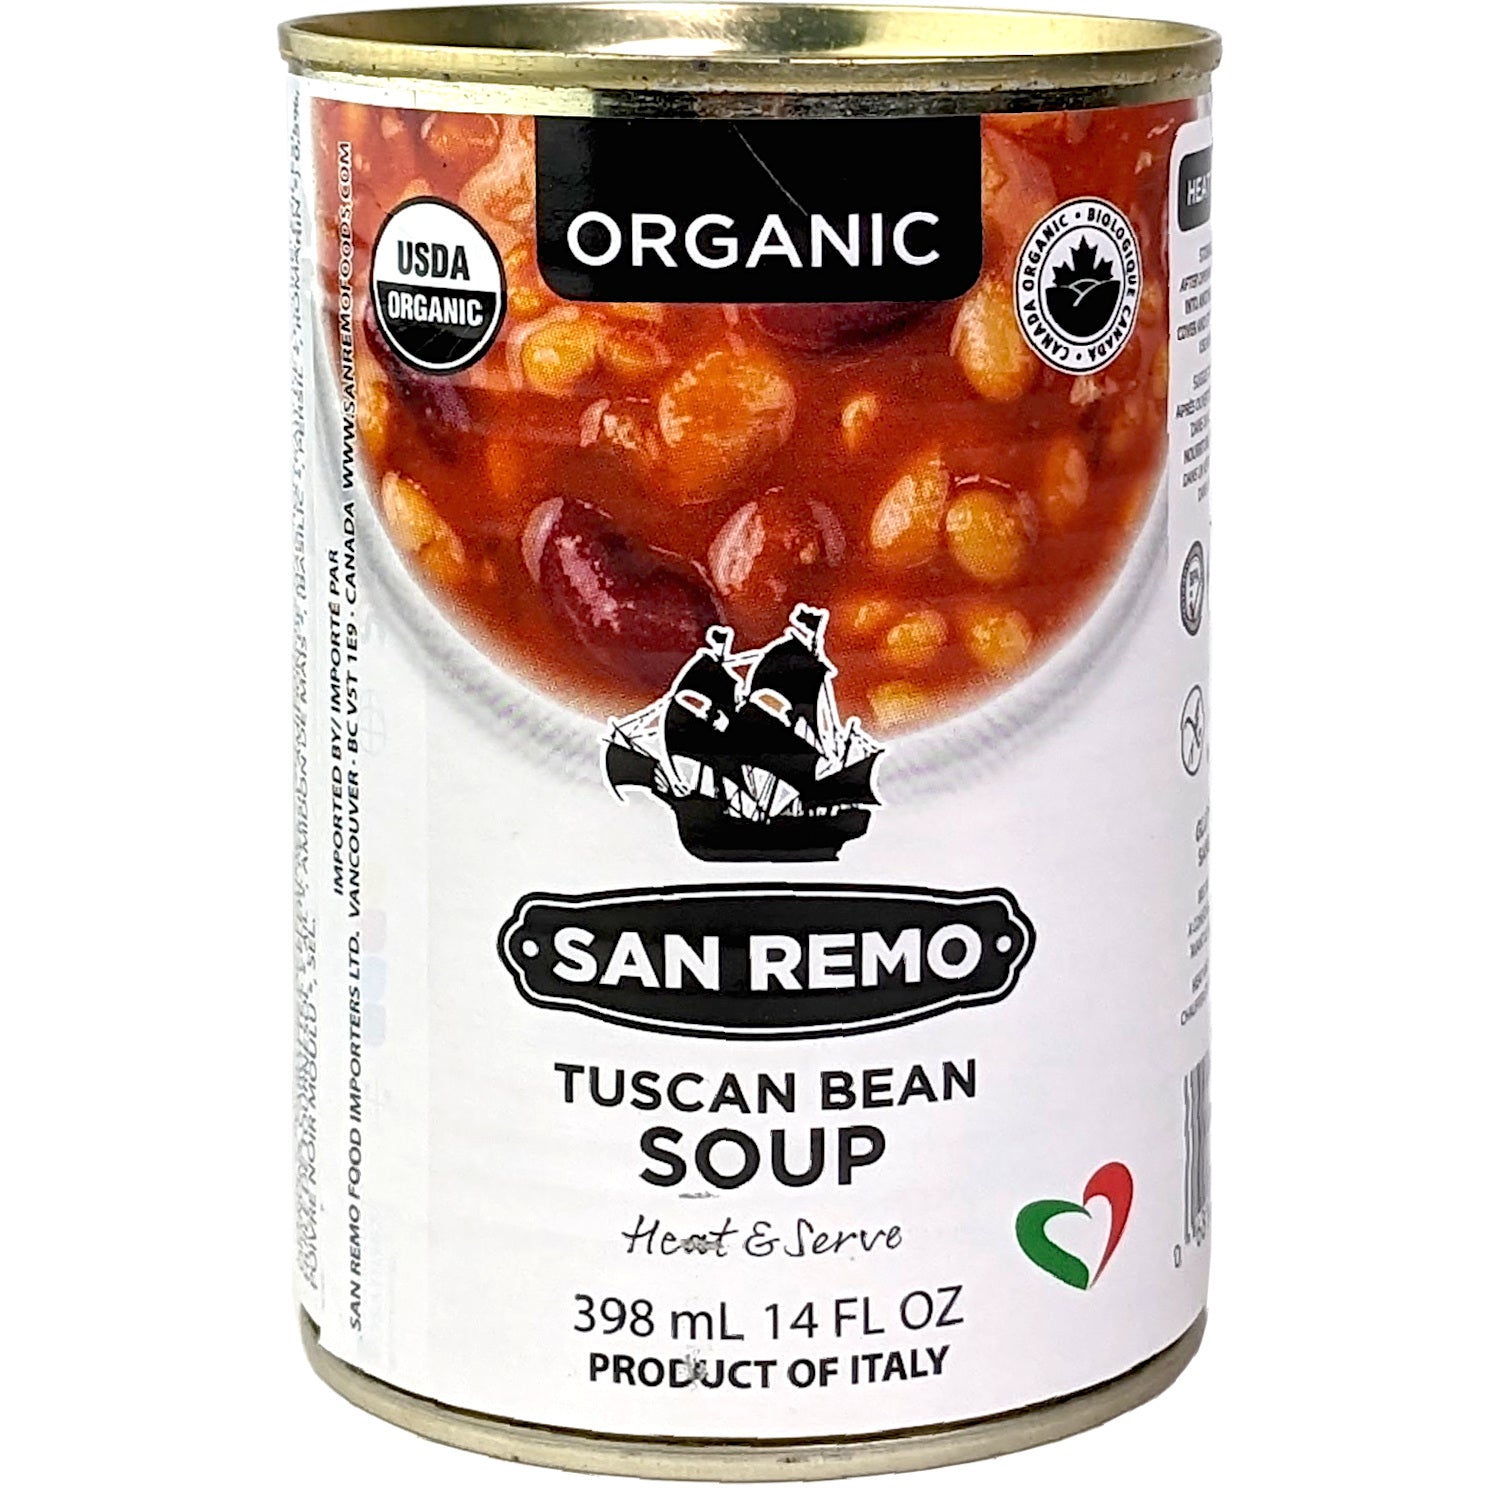 *New - San Remo Organic Heat & Eat Soups